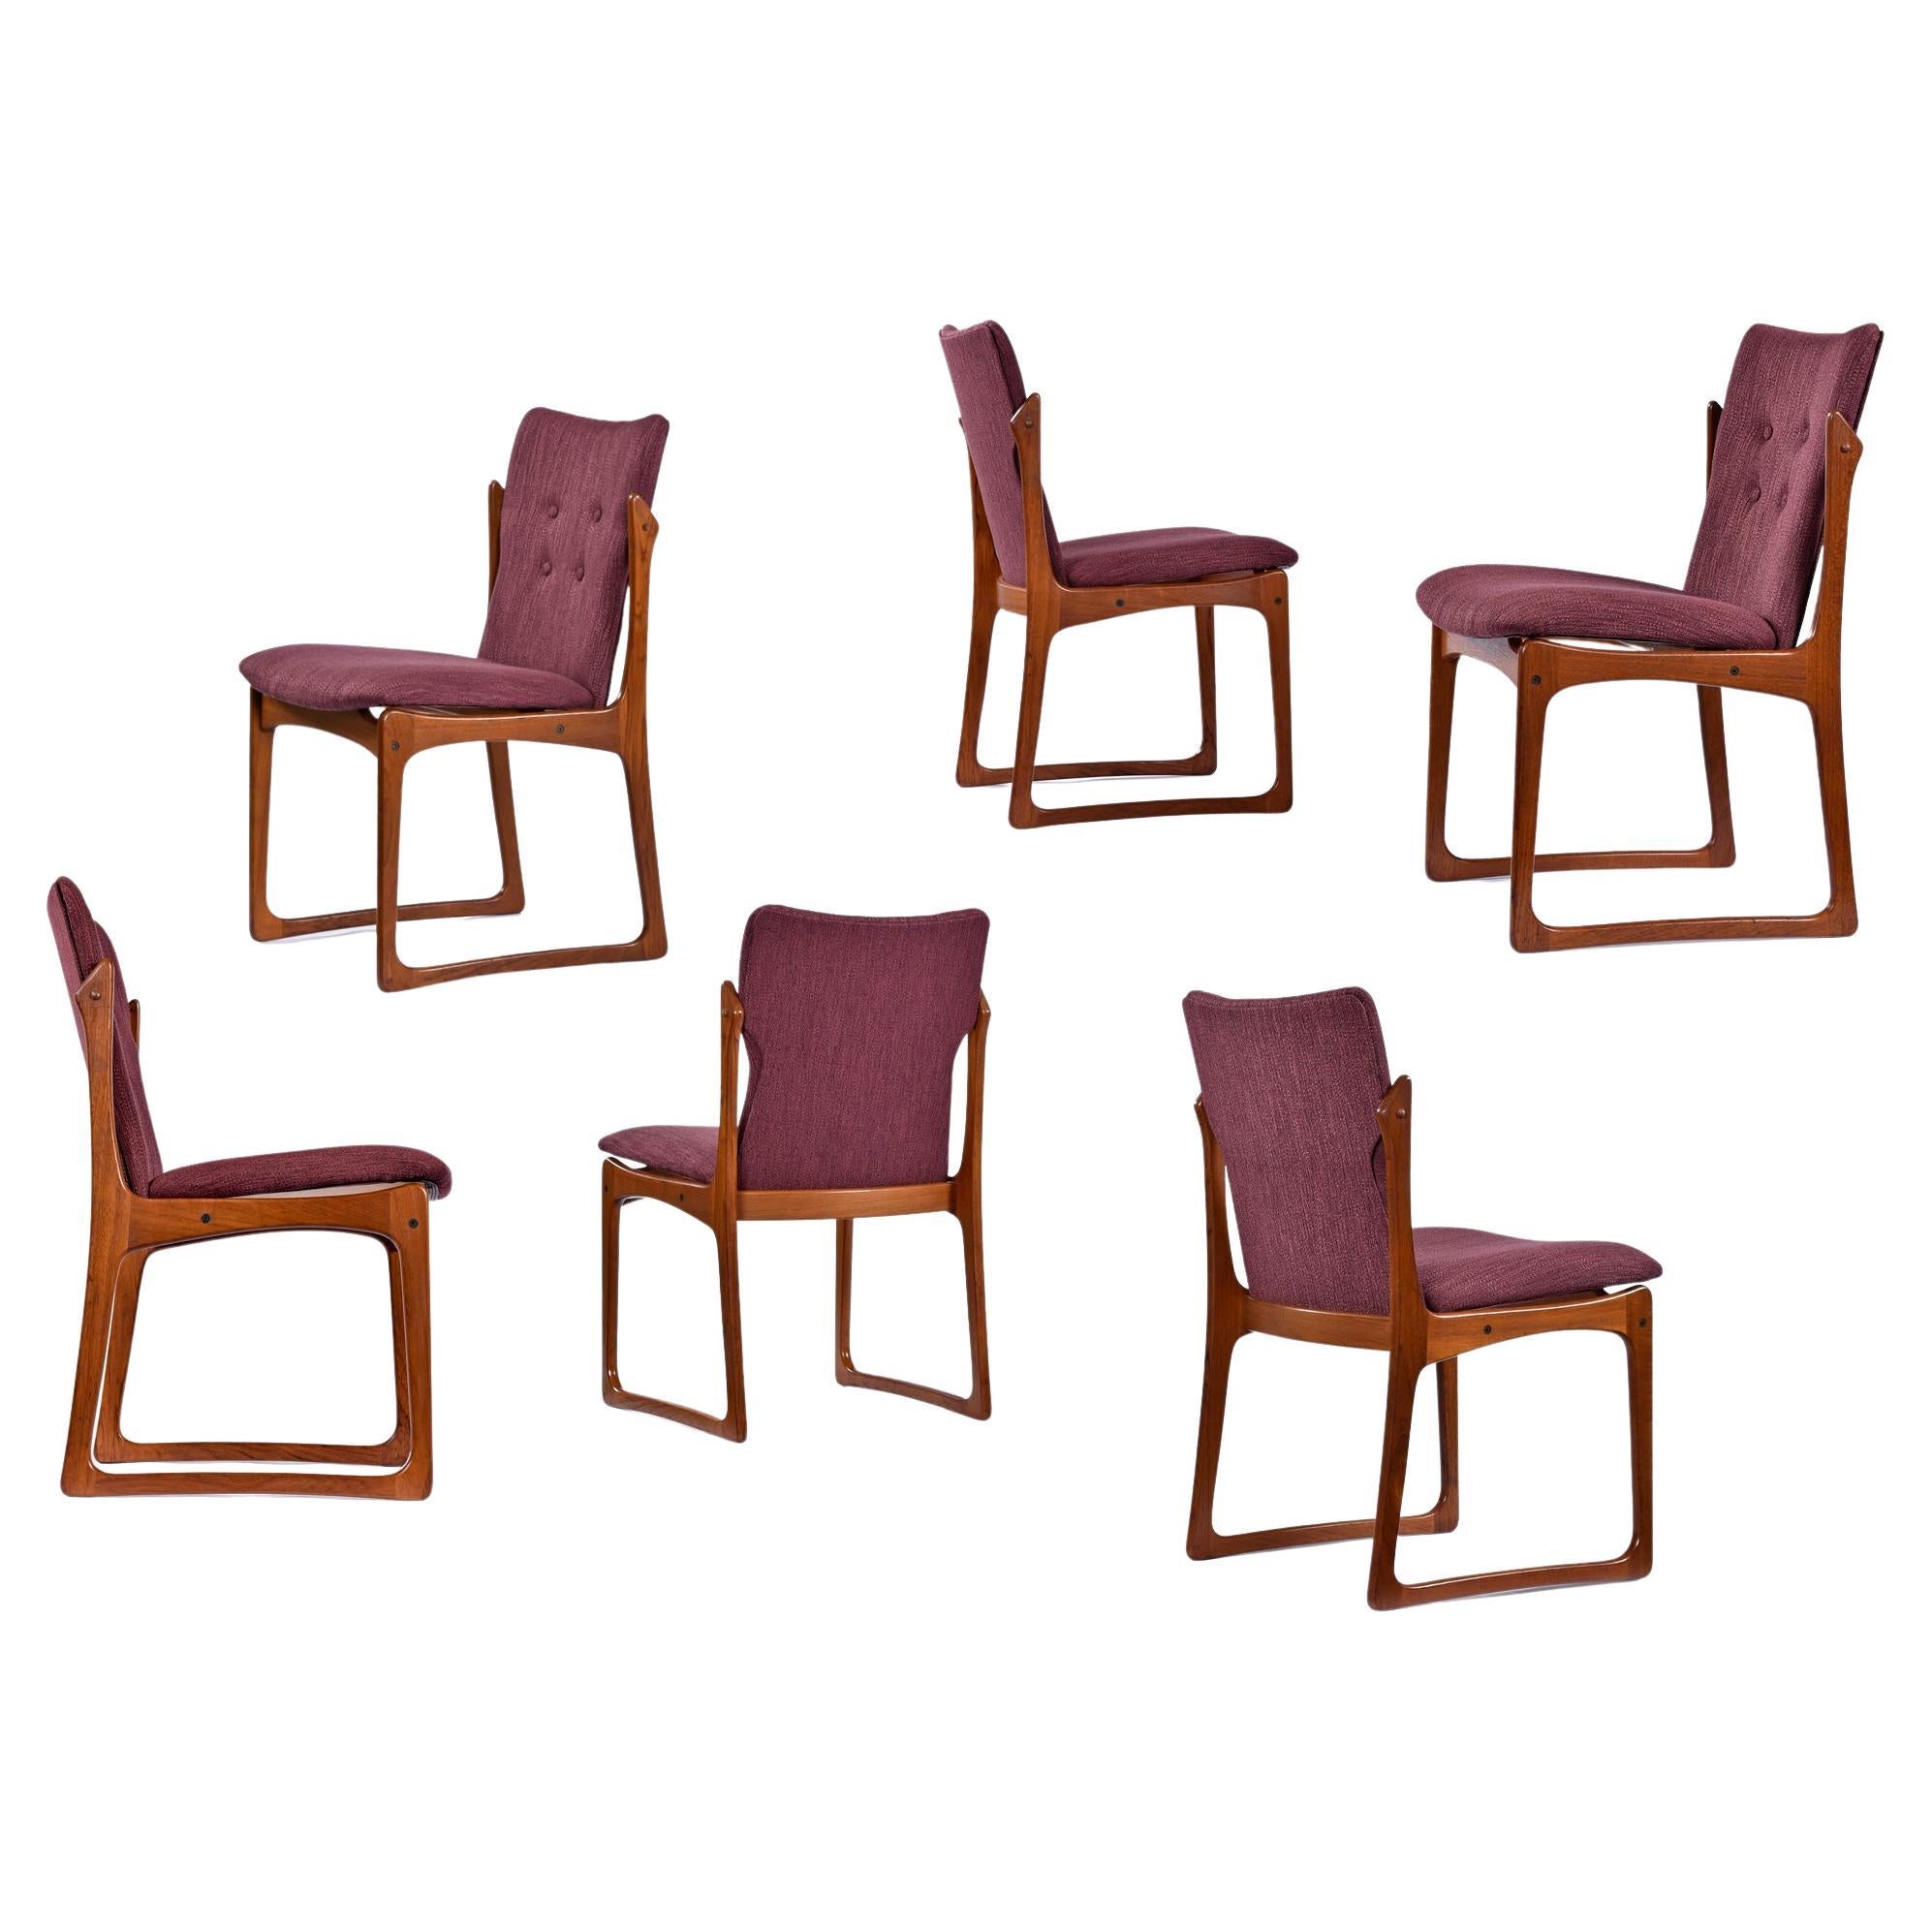 Scandinavian Modern Vamdrup Stolefabrik Solid Teak Danish Dining Chairs Set of 6 For Sale